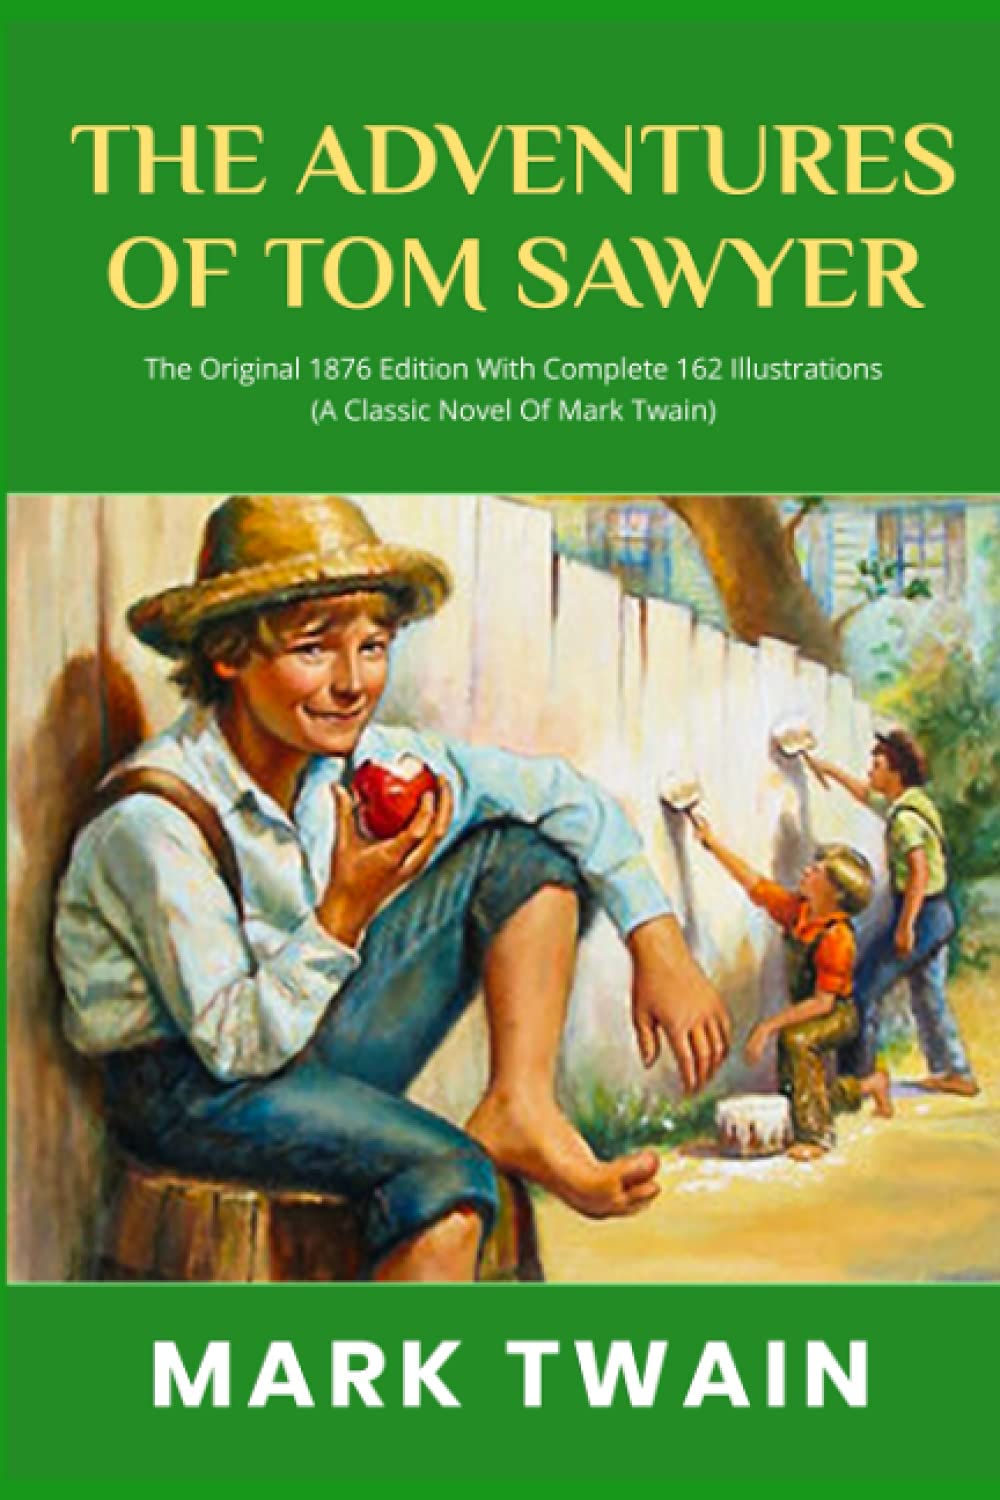 THE ADVENTURES OF TOM SAWYER BY MARK TWAIN